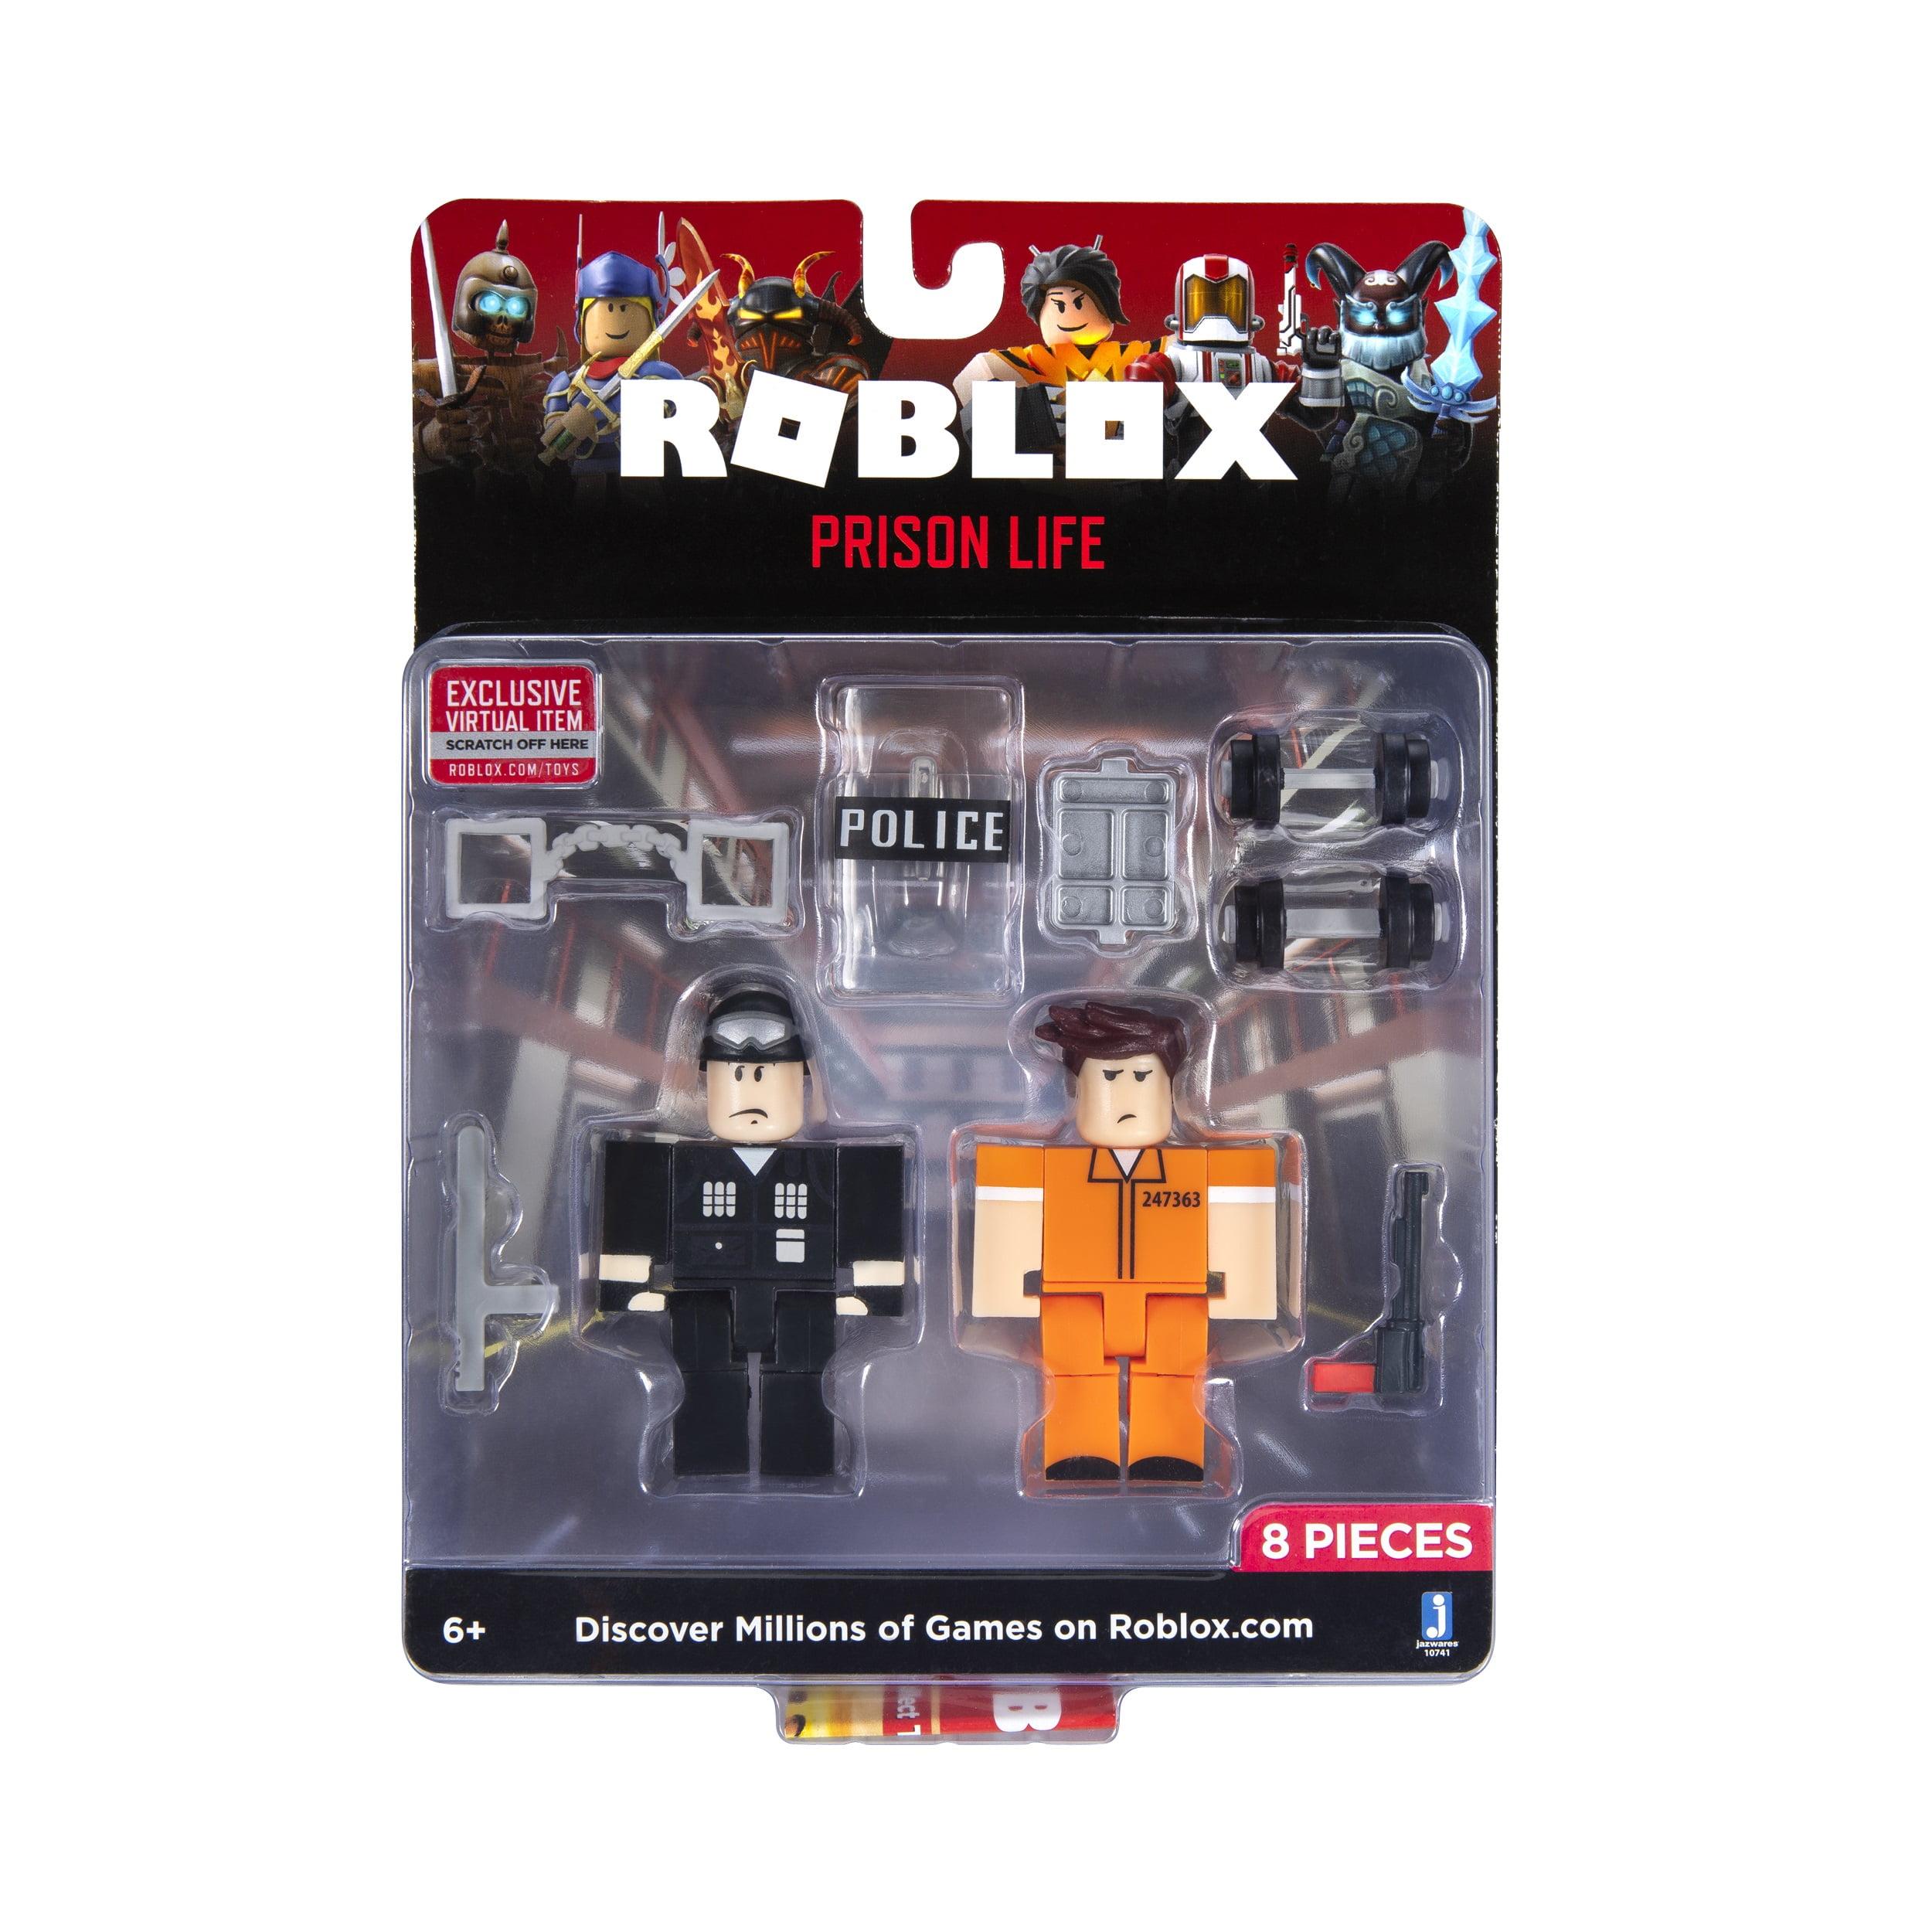 Roblox Action Collection Prison Life Game Pack Includes Exclusive Virtual Item Walmart Com Walmart Com - roblox prisoner clothes